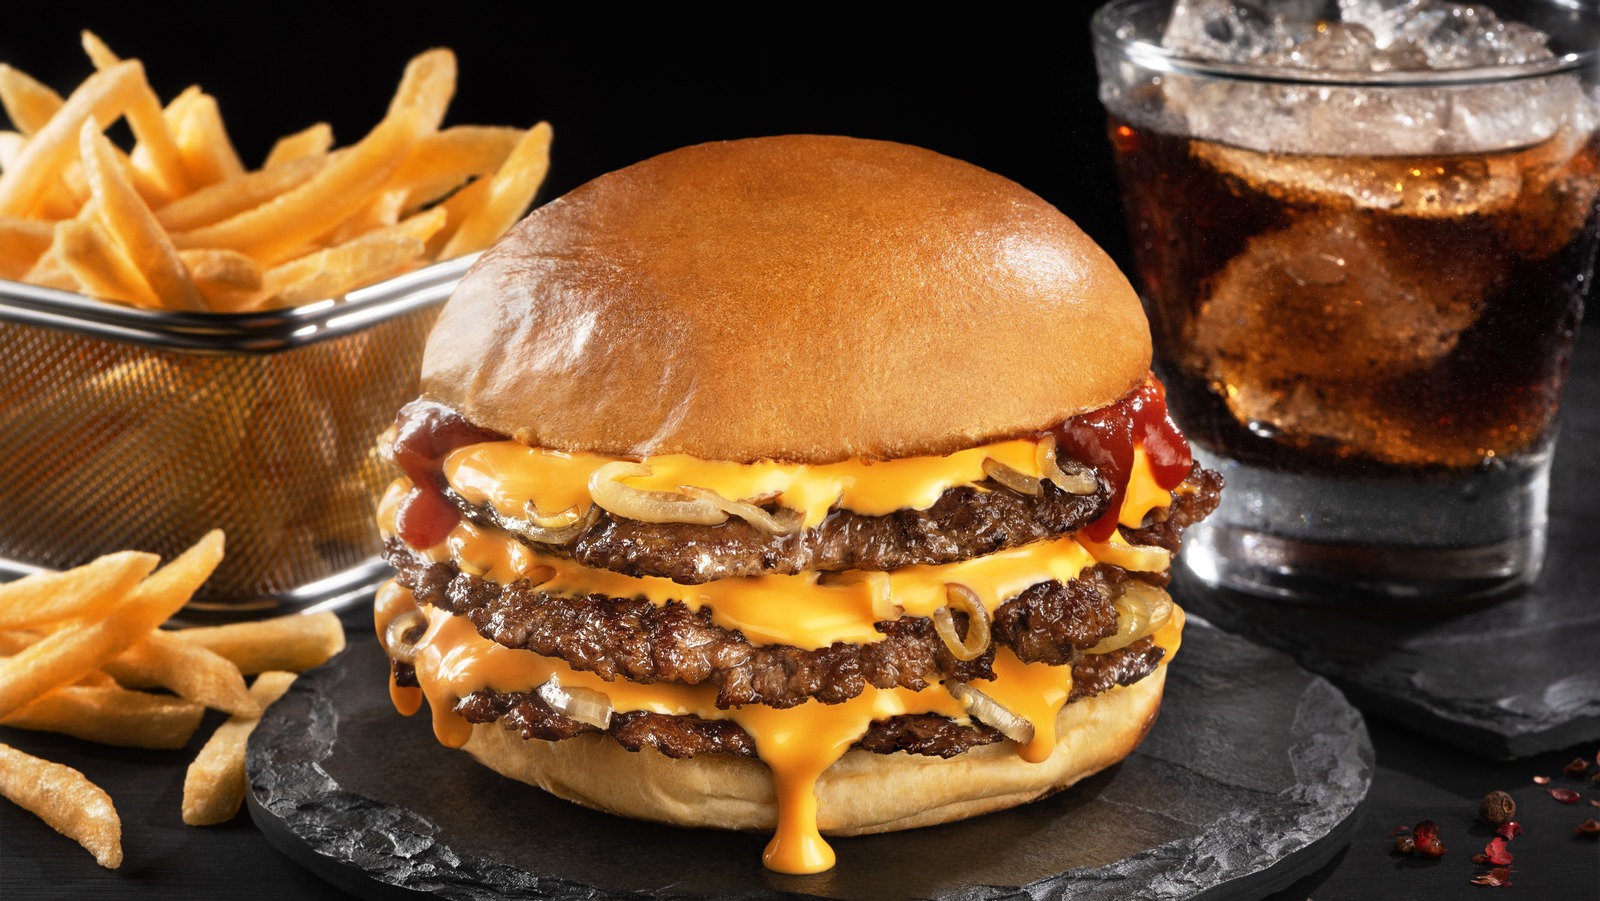 7 Restaurant Chains That Make the Best Smash Burgers